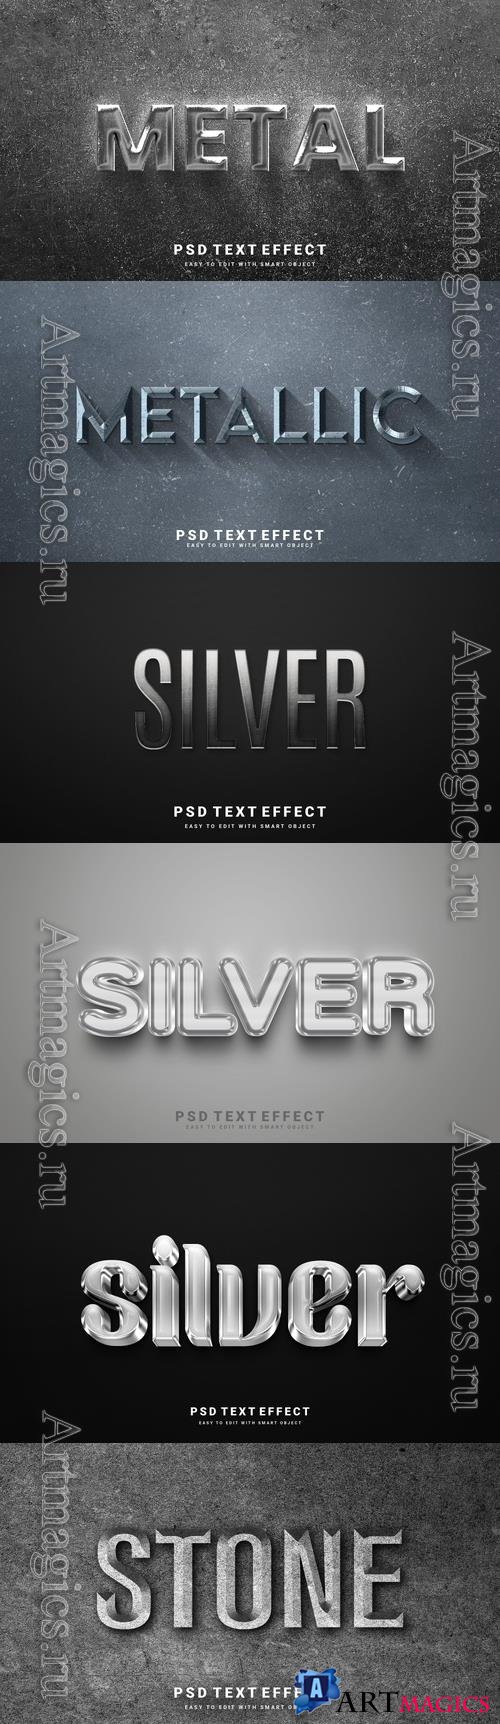 PSD silver, stone, metal editable text effect design